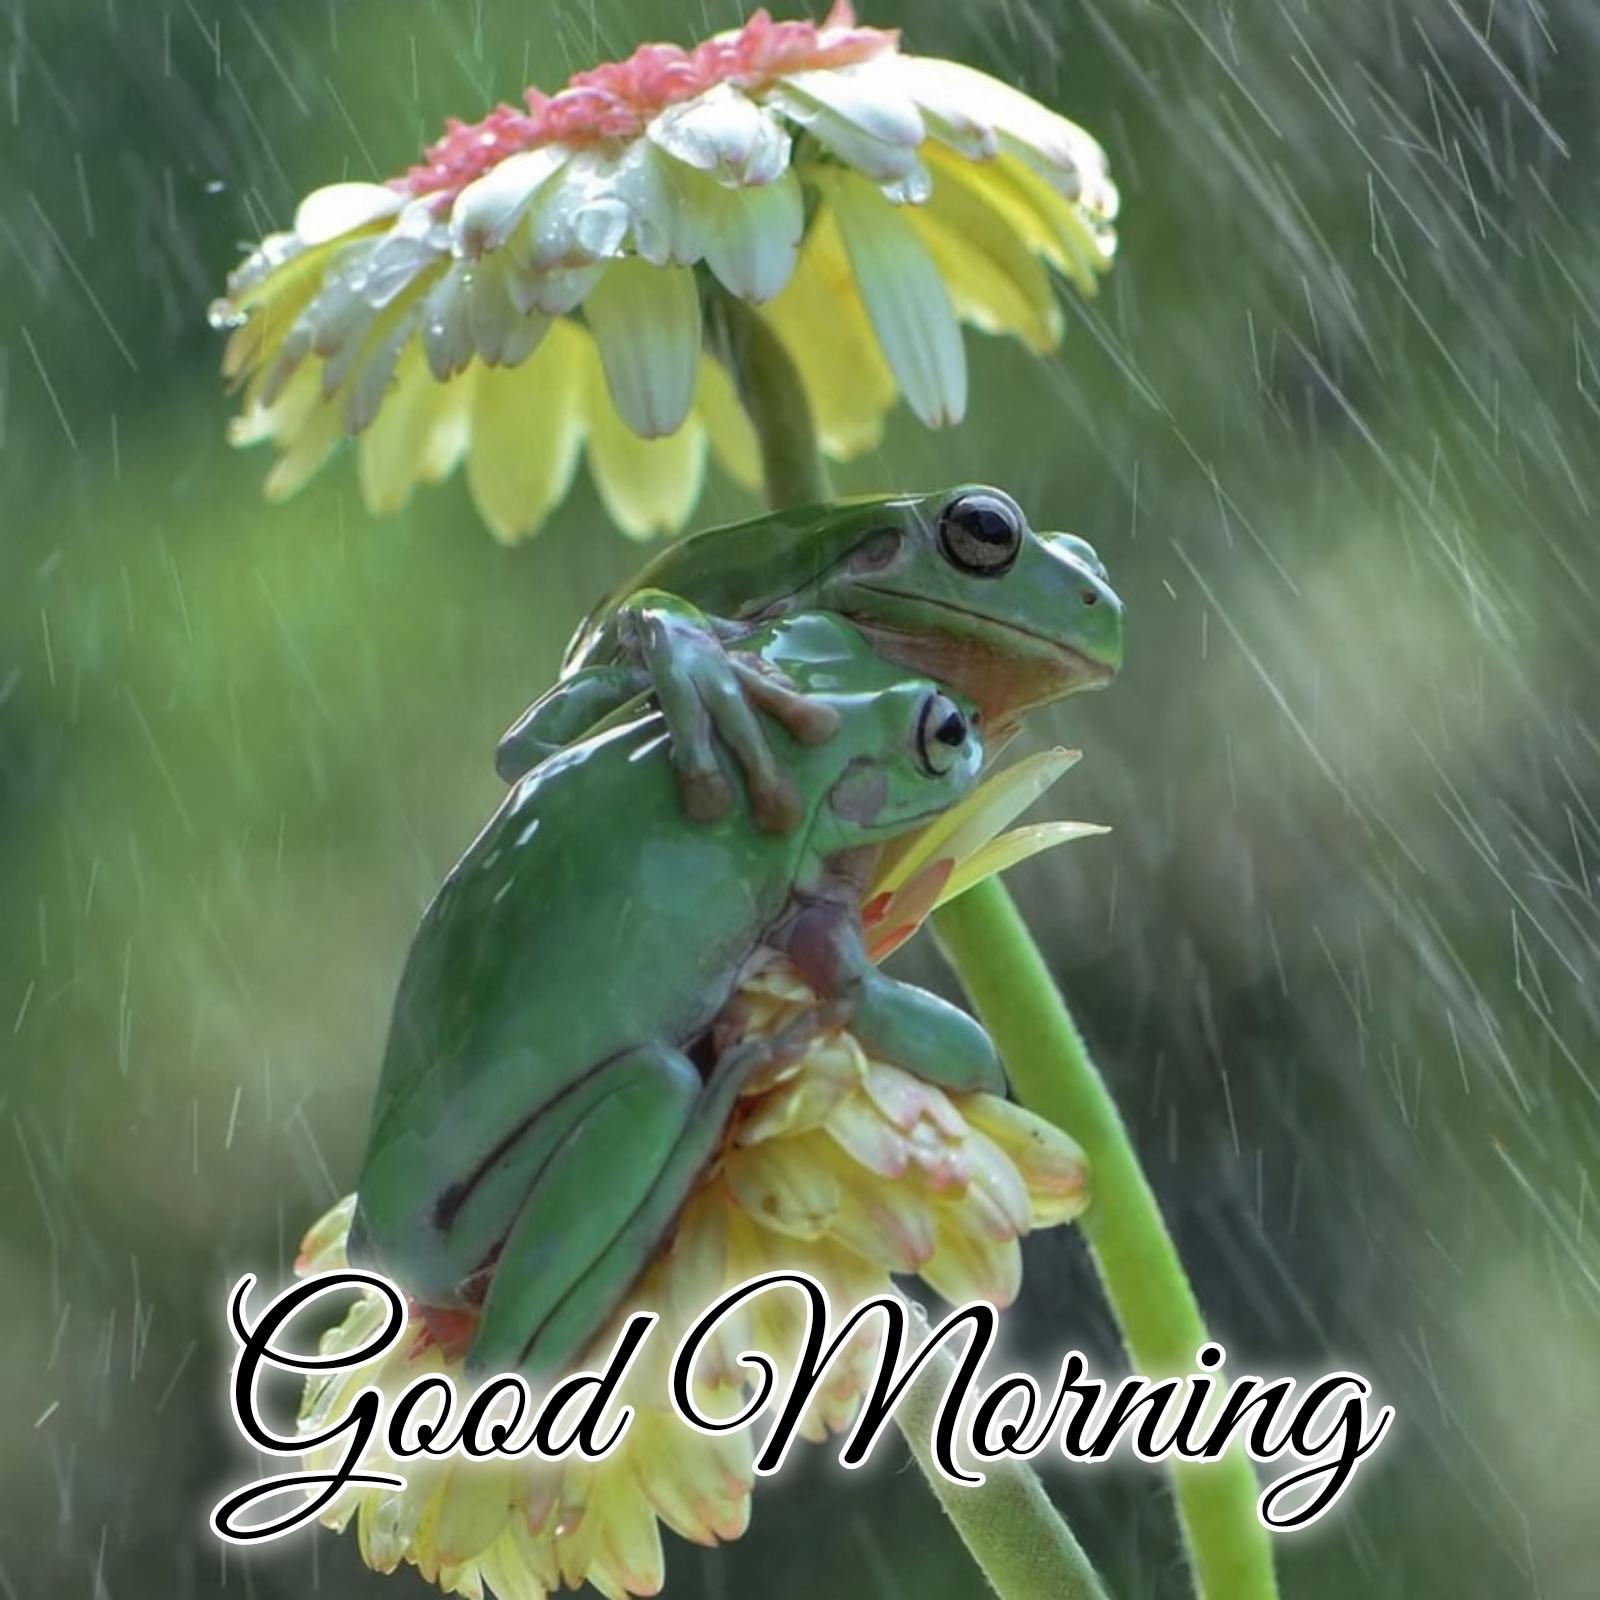 Rain Flowers Frog Good Morning Images